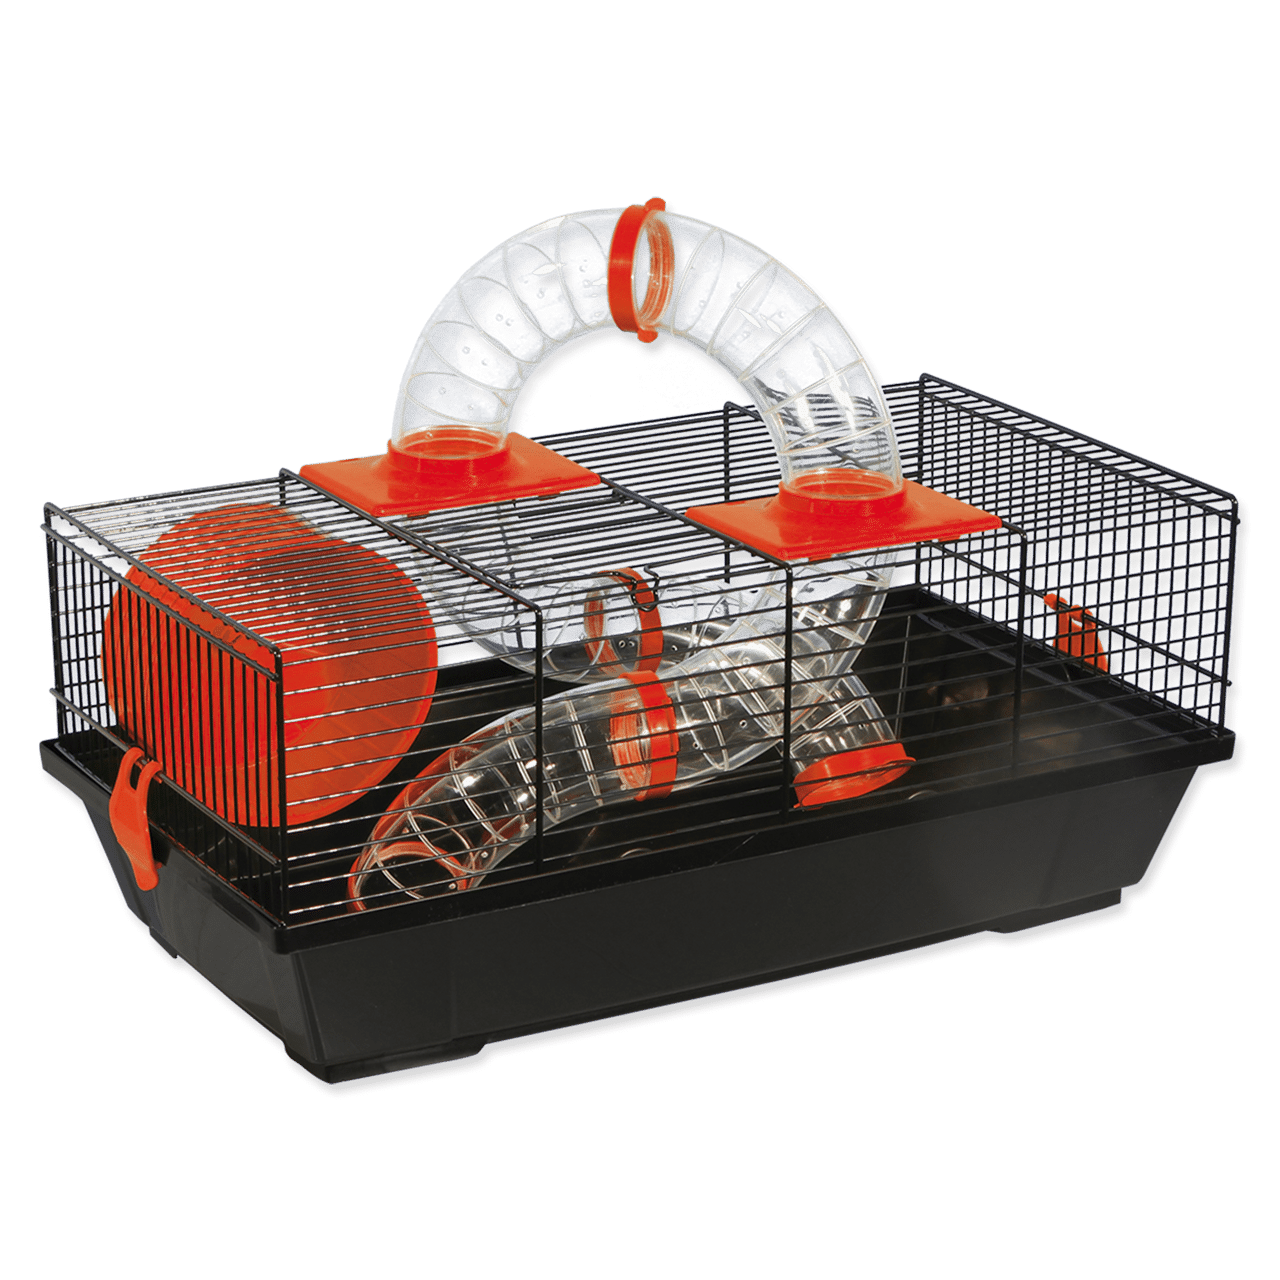 Būris : Placek Cage Libor black, accessories orange, 50.5*28*21cm 110346 (8595091773404)